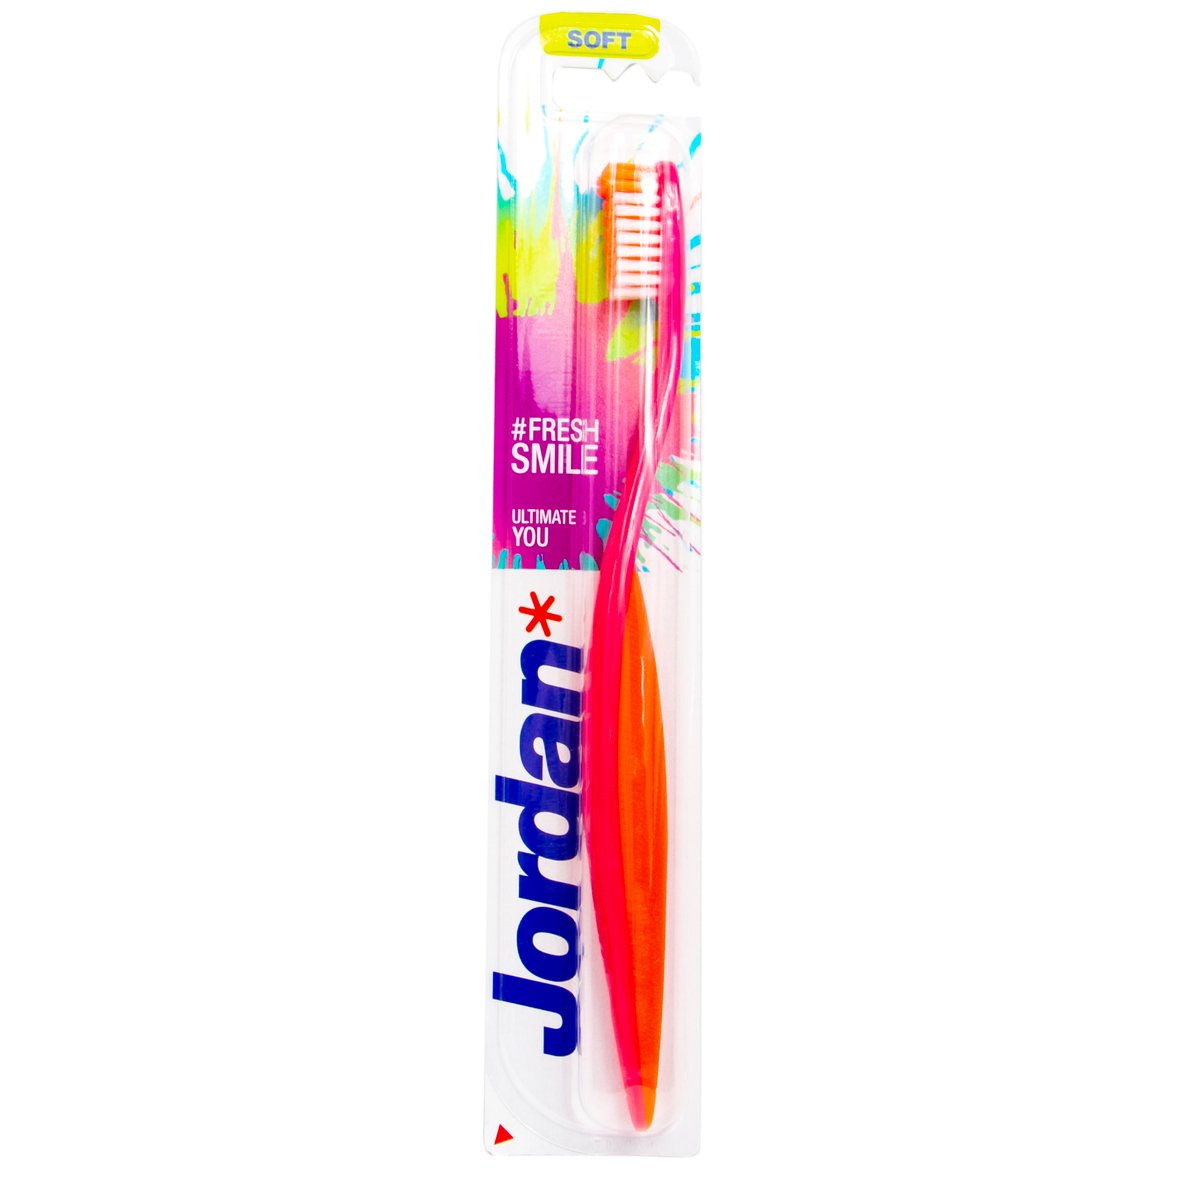 Jordan Ultimate Soft Tooth Brush 1 pc